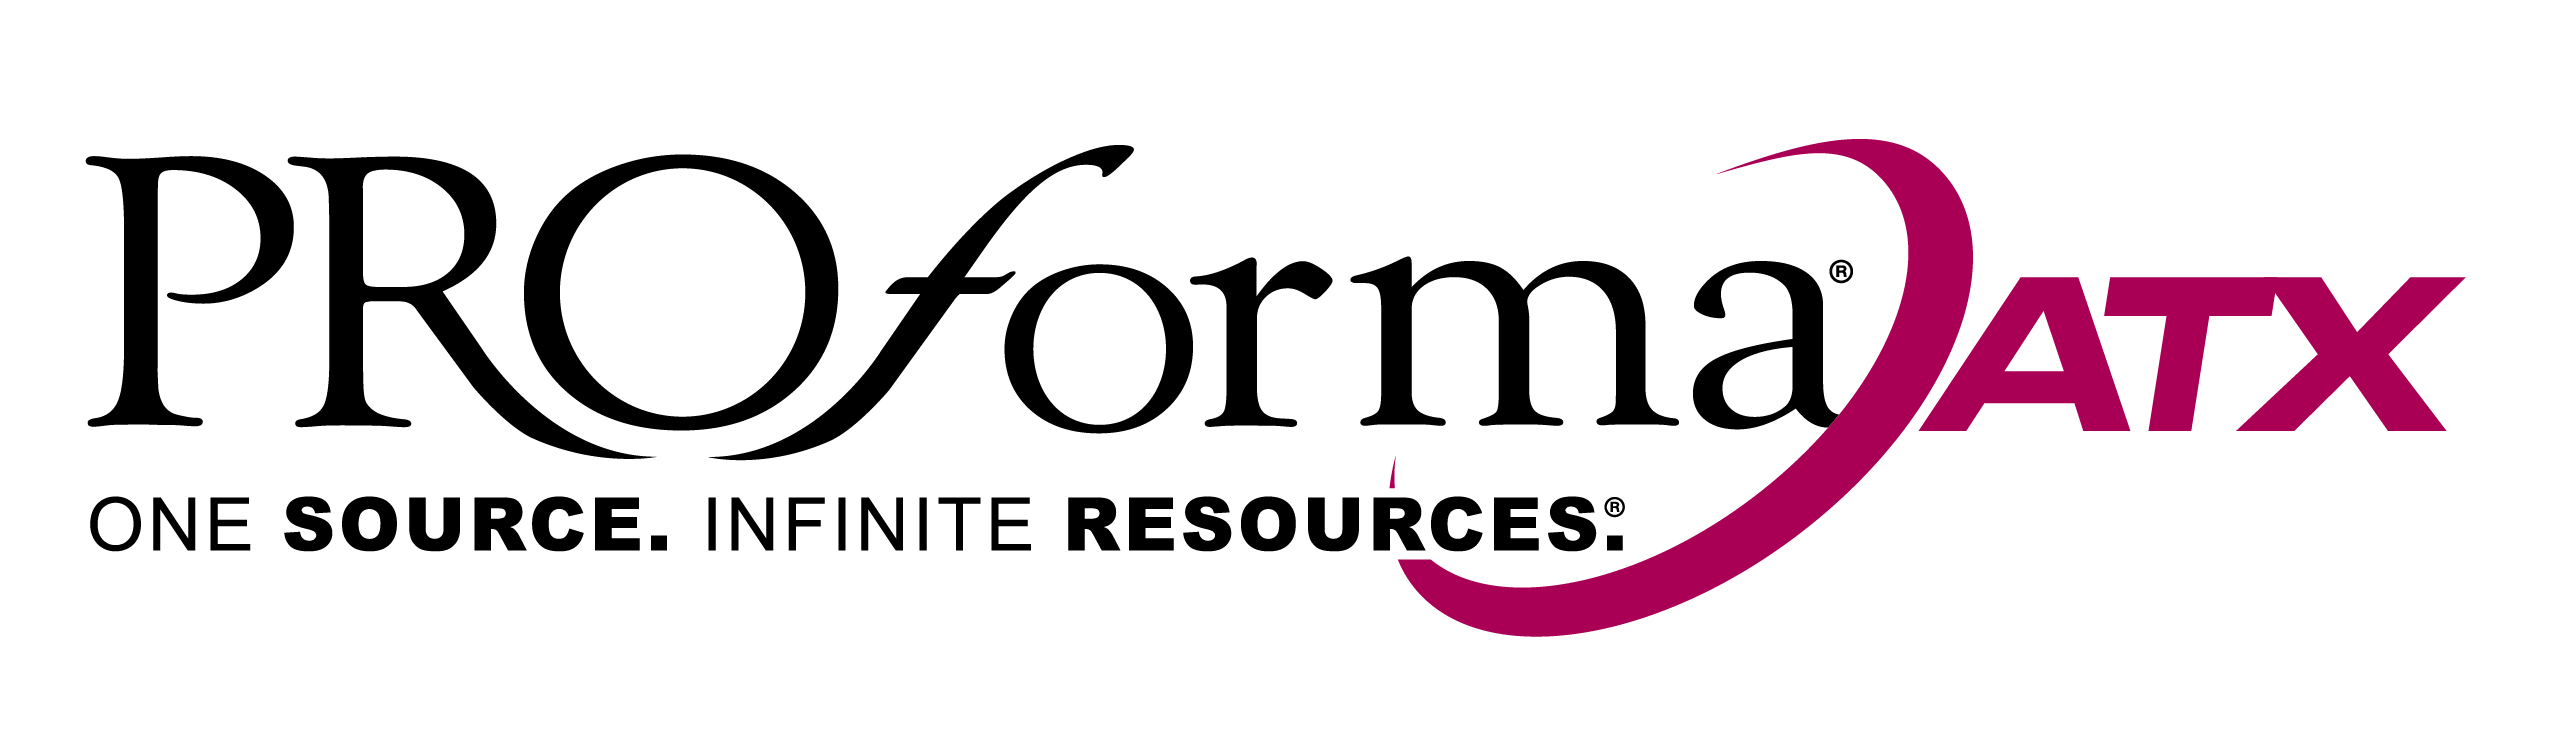 Proforma ATX's Logo